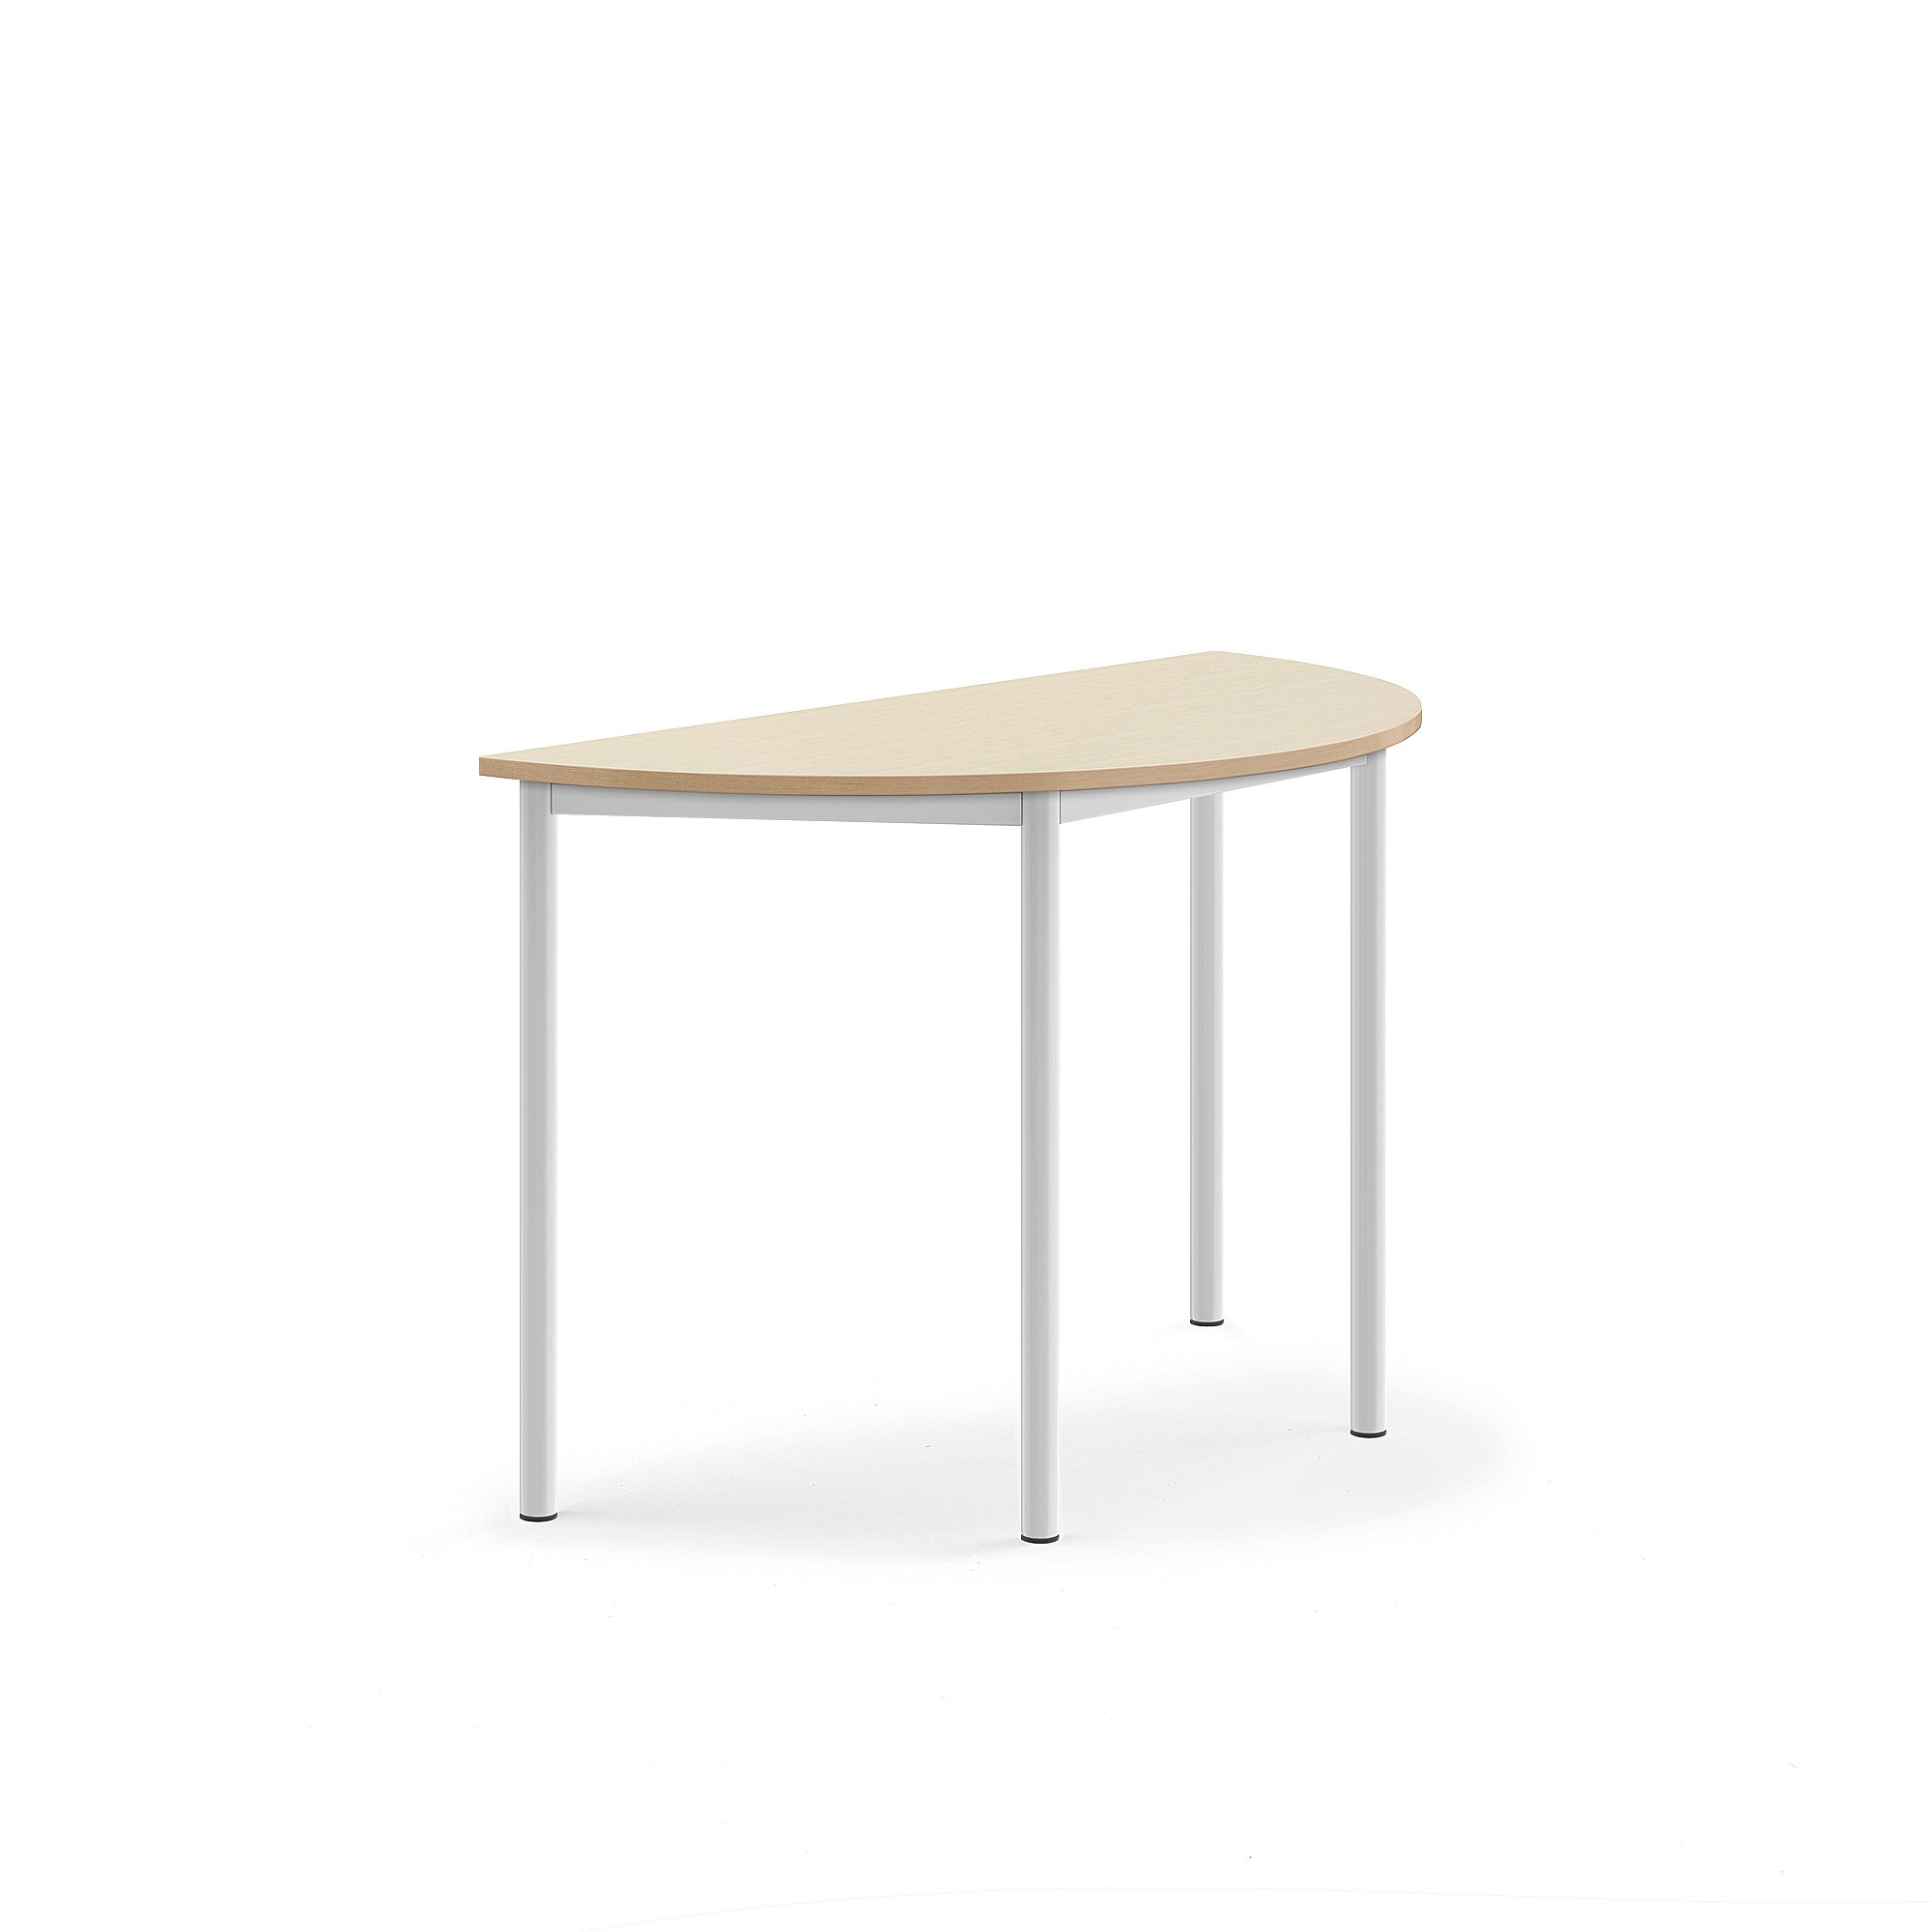 Stůl SONITUS, půlkruh, 1200x600x760 mm, bílé nohy, HPL deska tlumící hluk, bříza